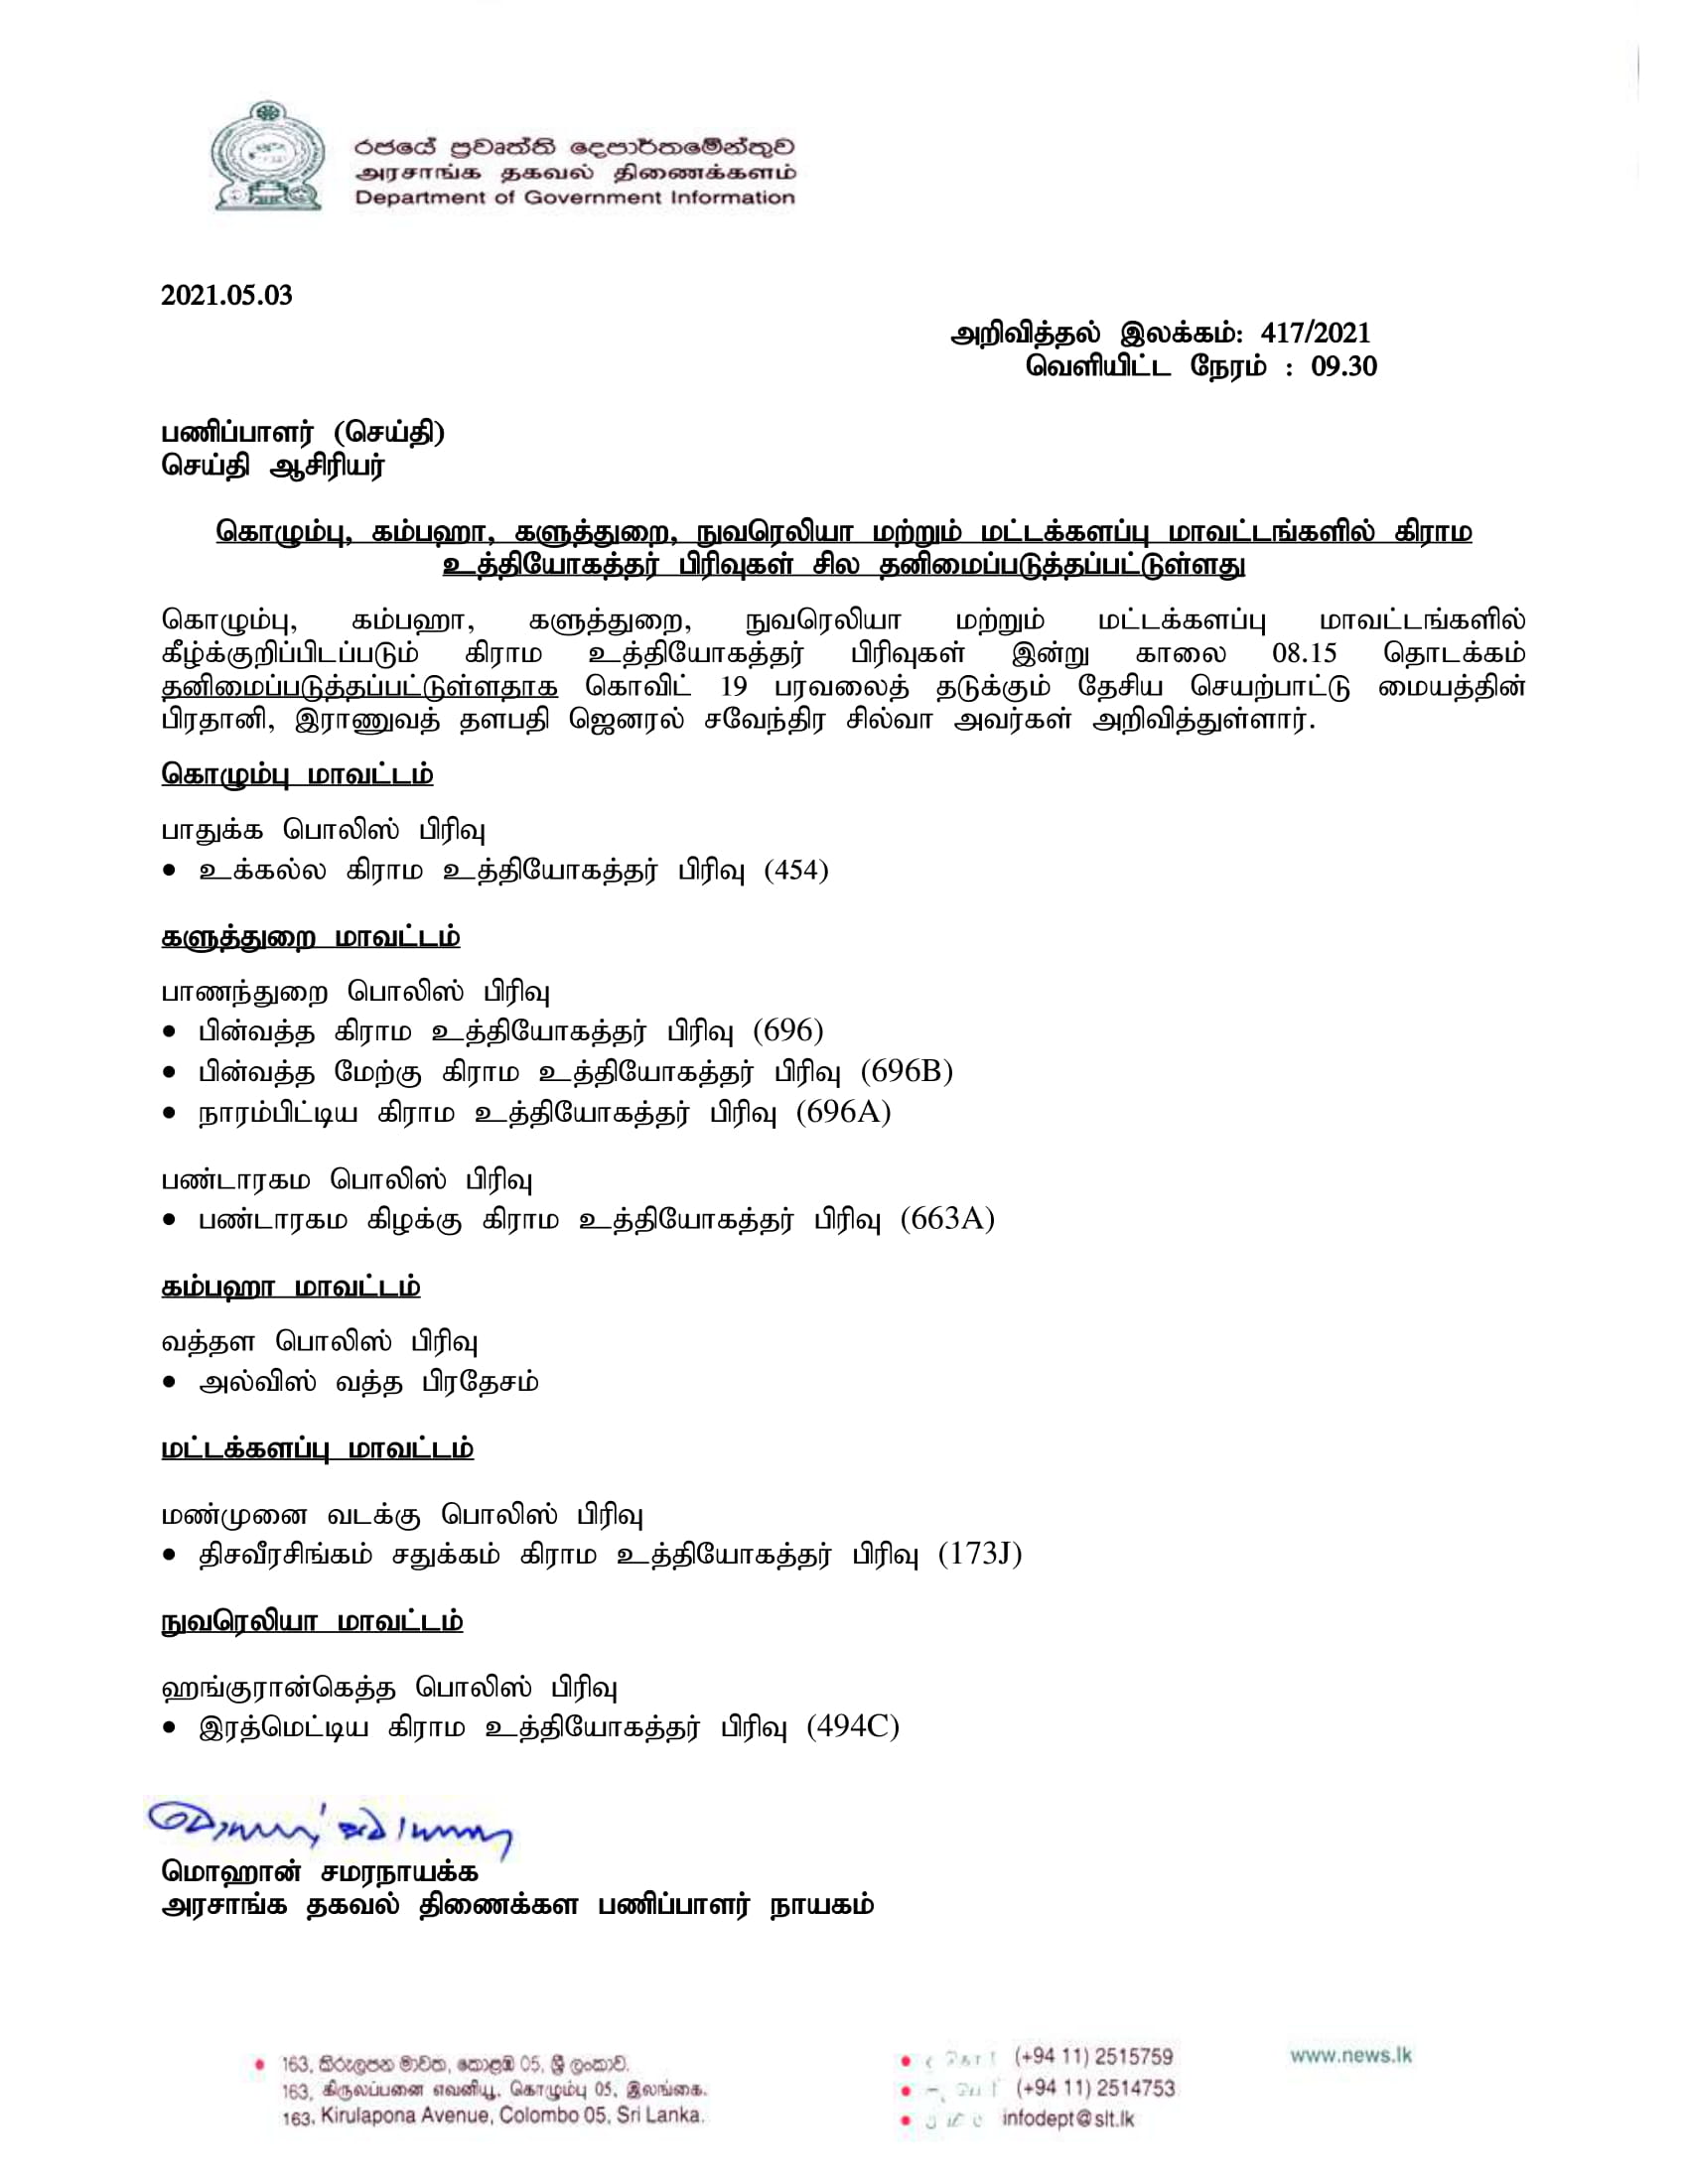 Release No 417 Tamil 1